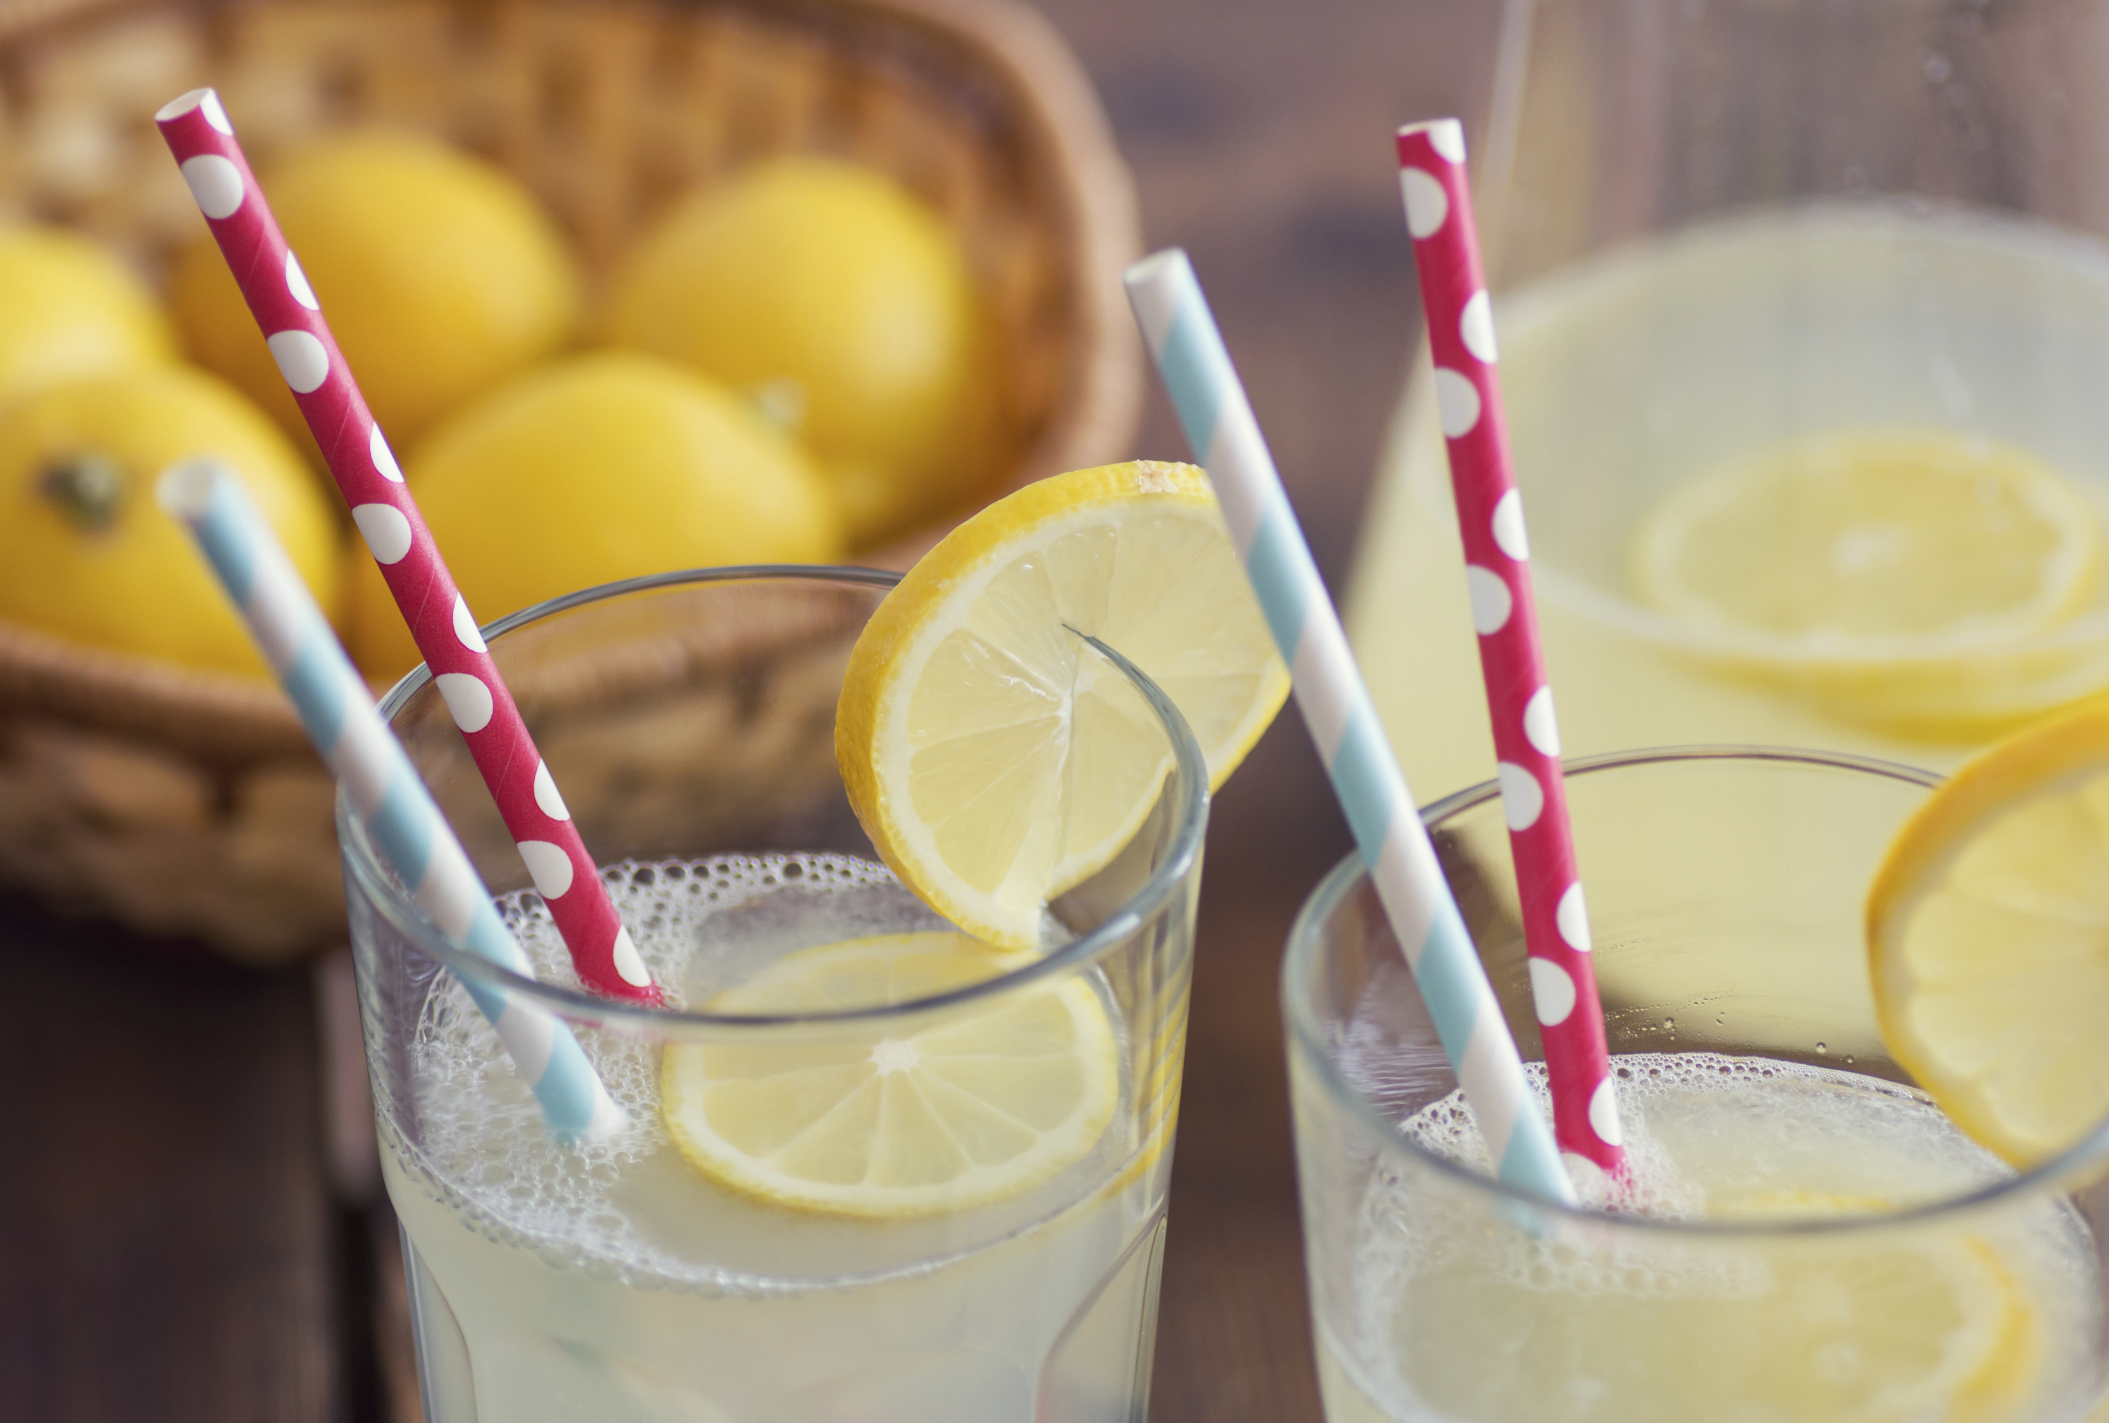 The real lemonade provides aweso...